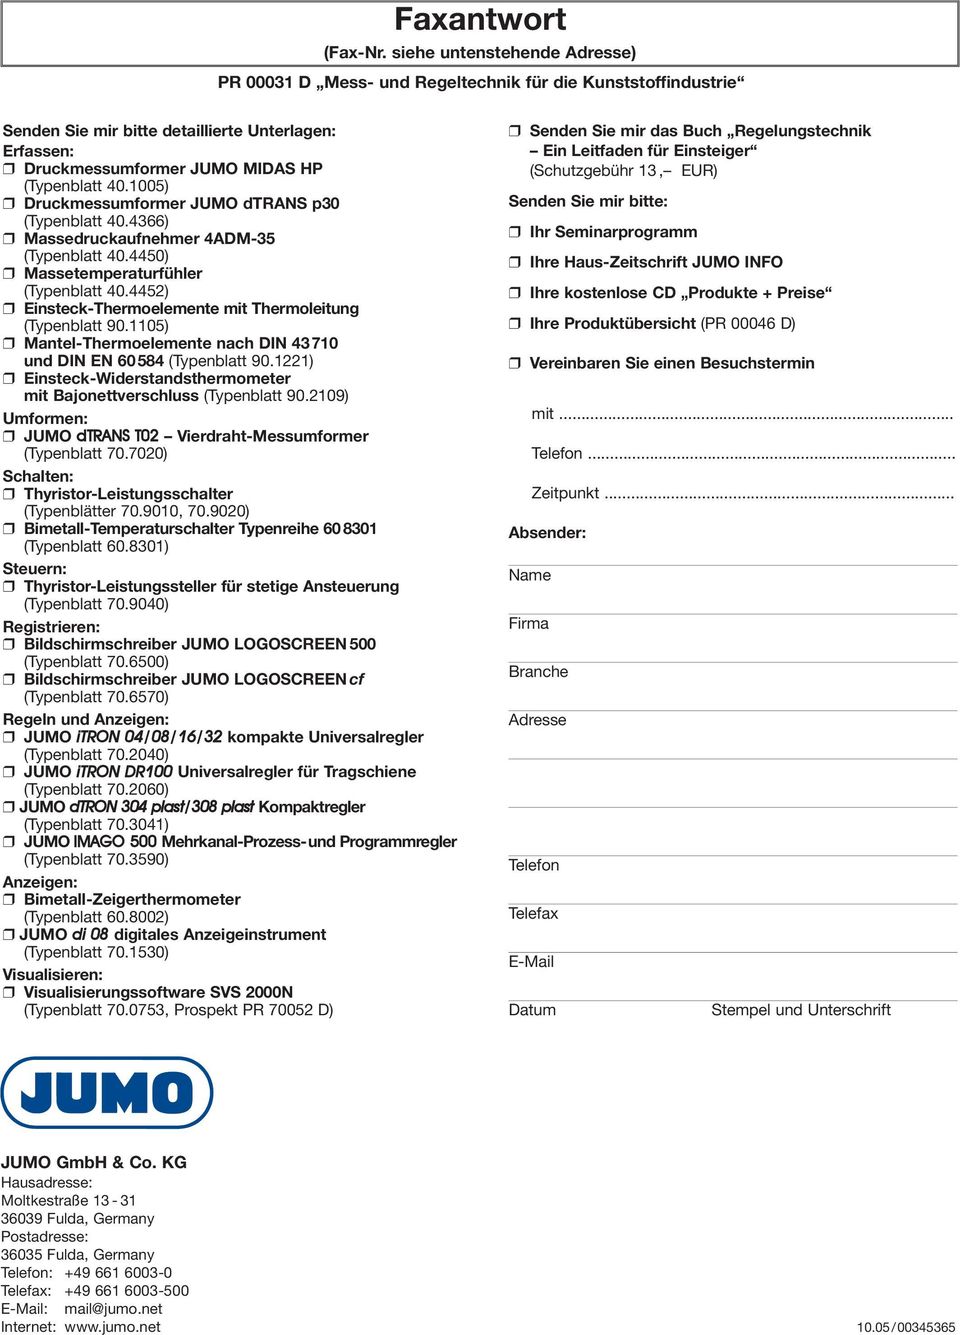 1005) Druckmessumformer JUMO dtrans p30 (Typenblatt 40.4366) Massedruckaufnehmer 4ADM-35 (Typenblatt 40.4450) Massetemperaturfühler (Typenblatt 40.